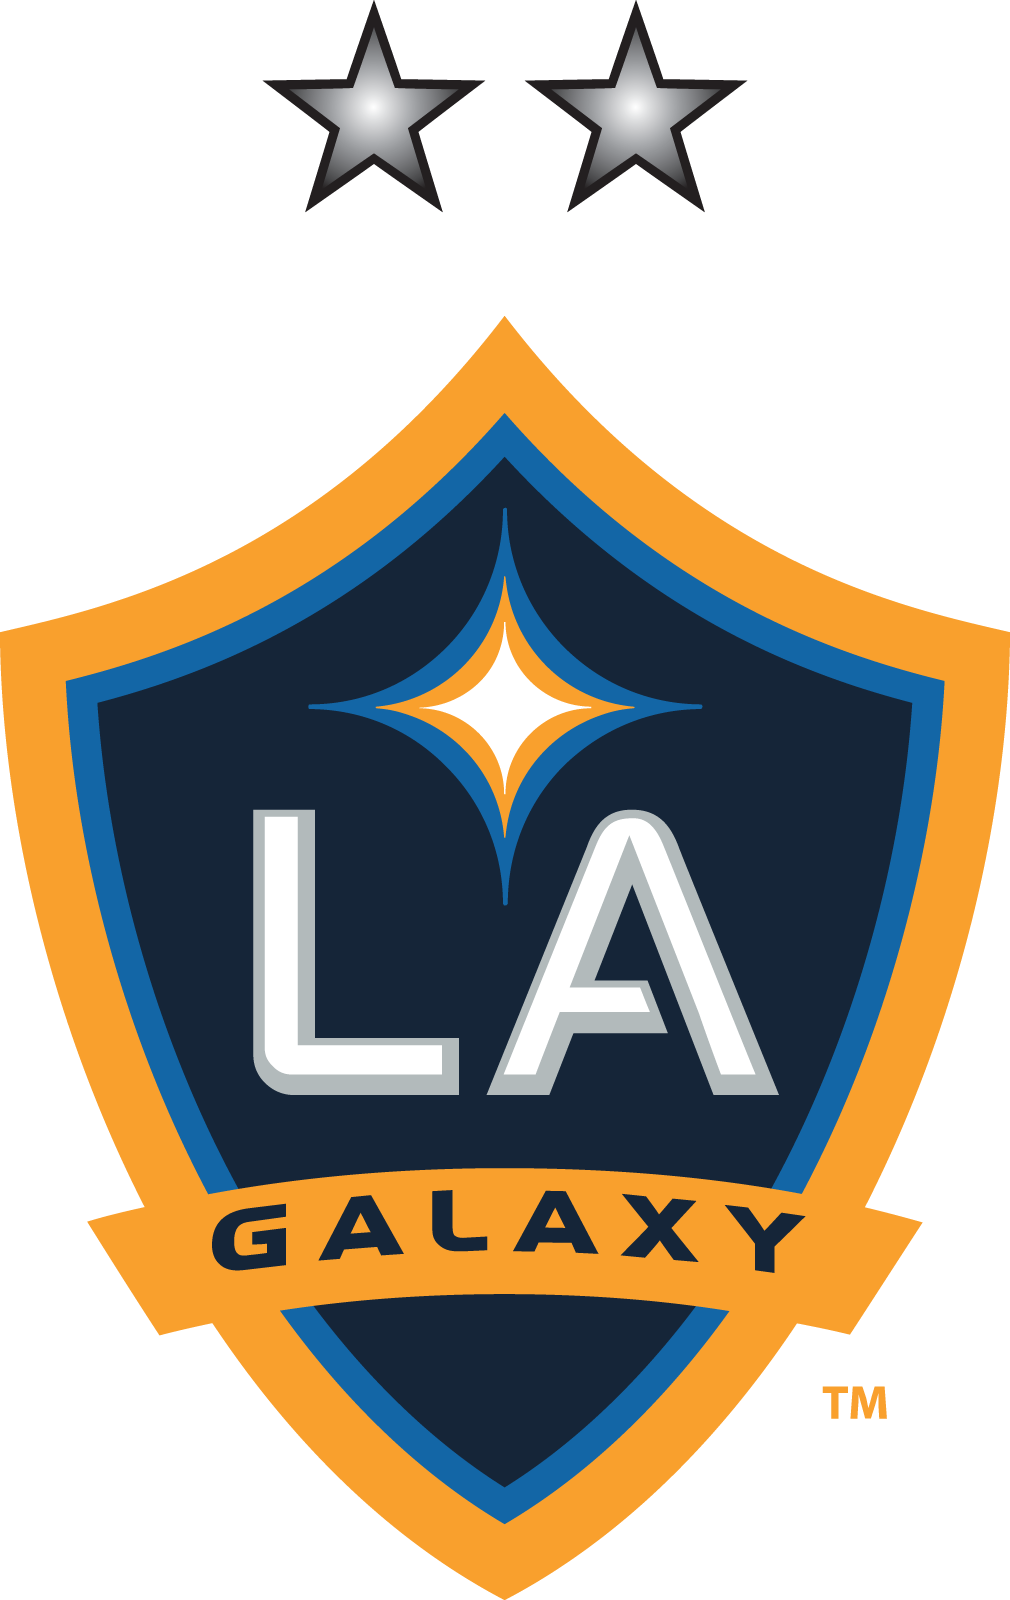 File:LA Galaxy logo (two silver stars).png